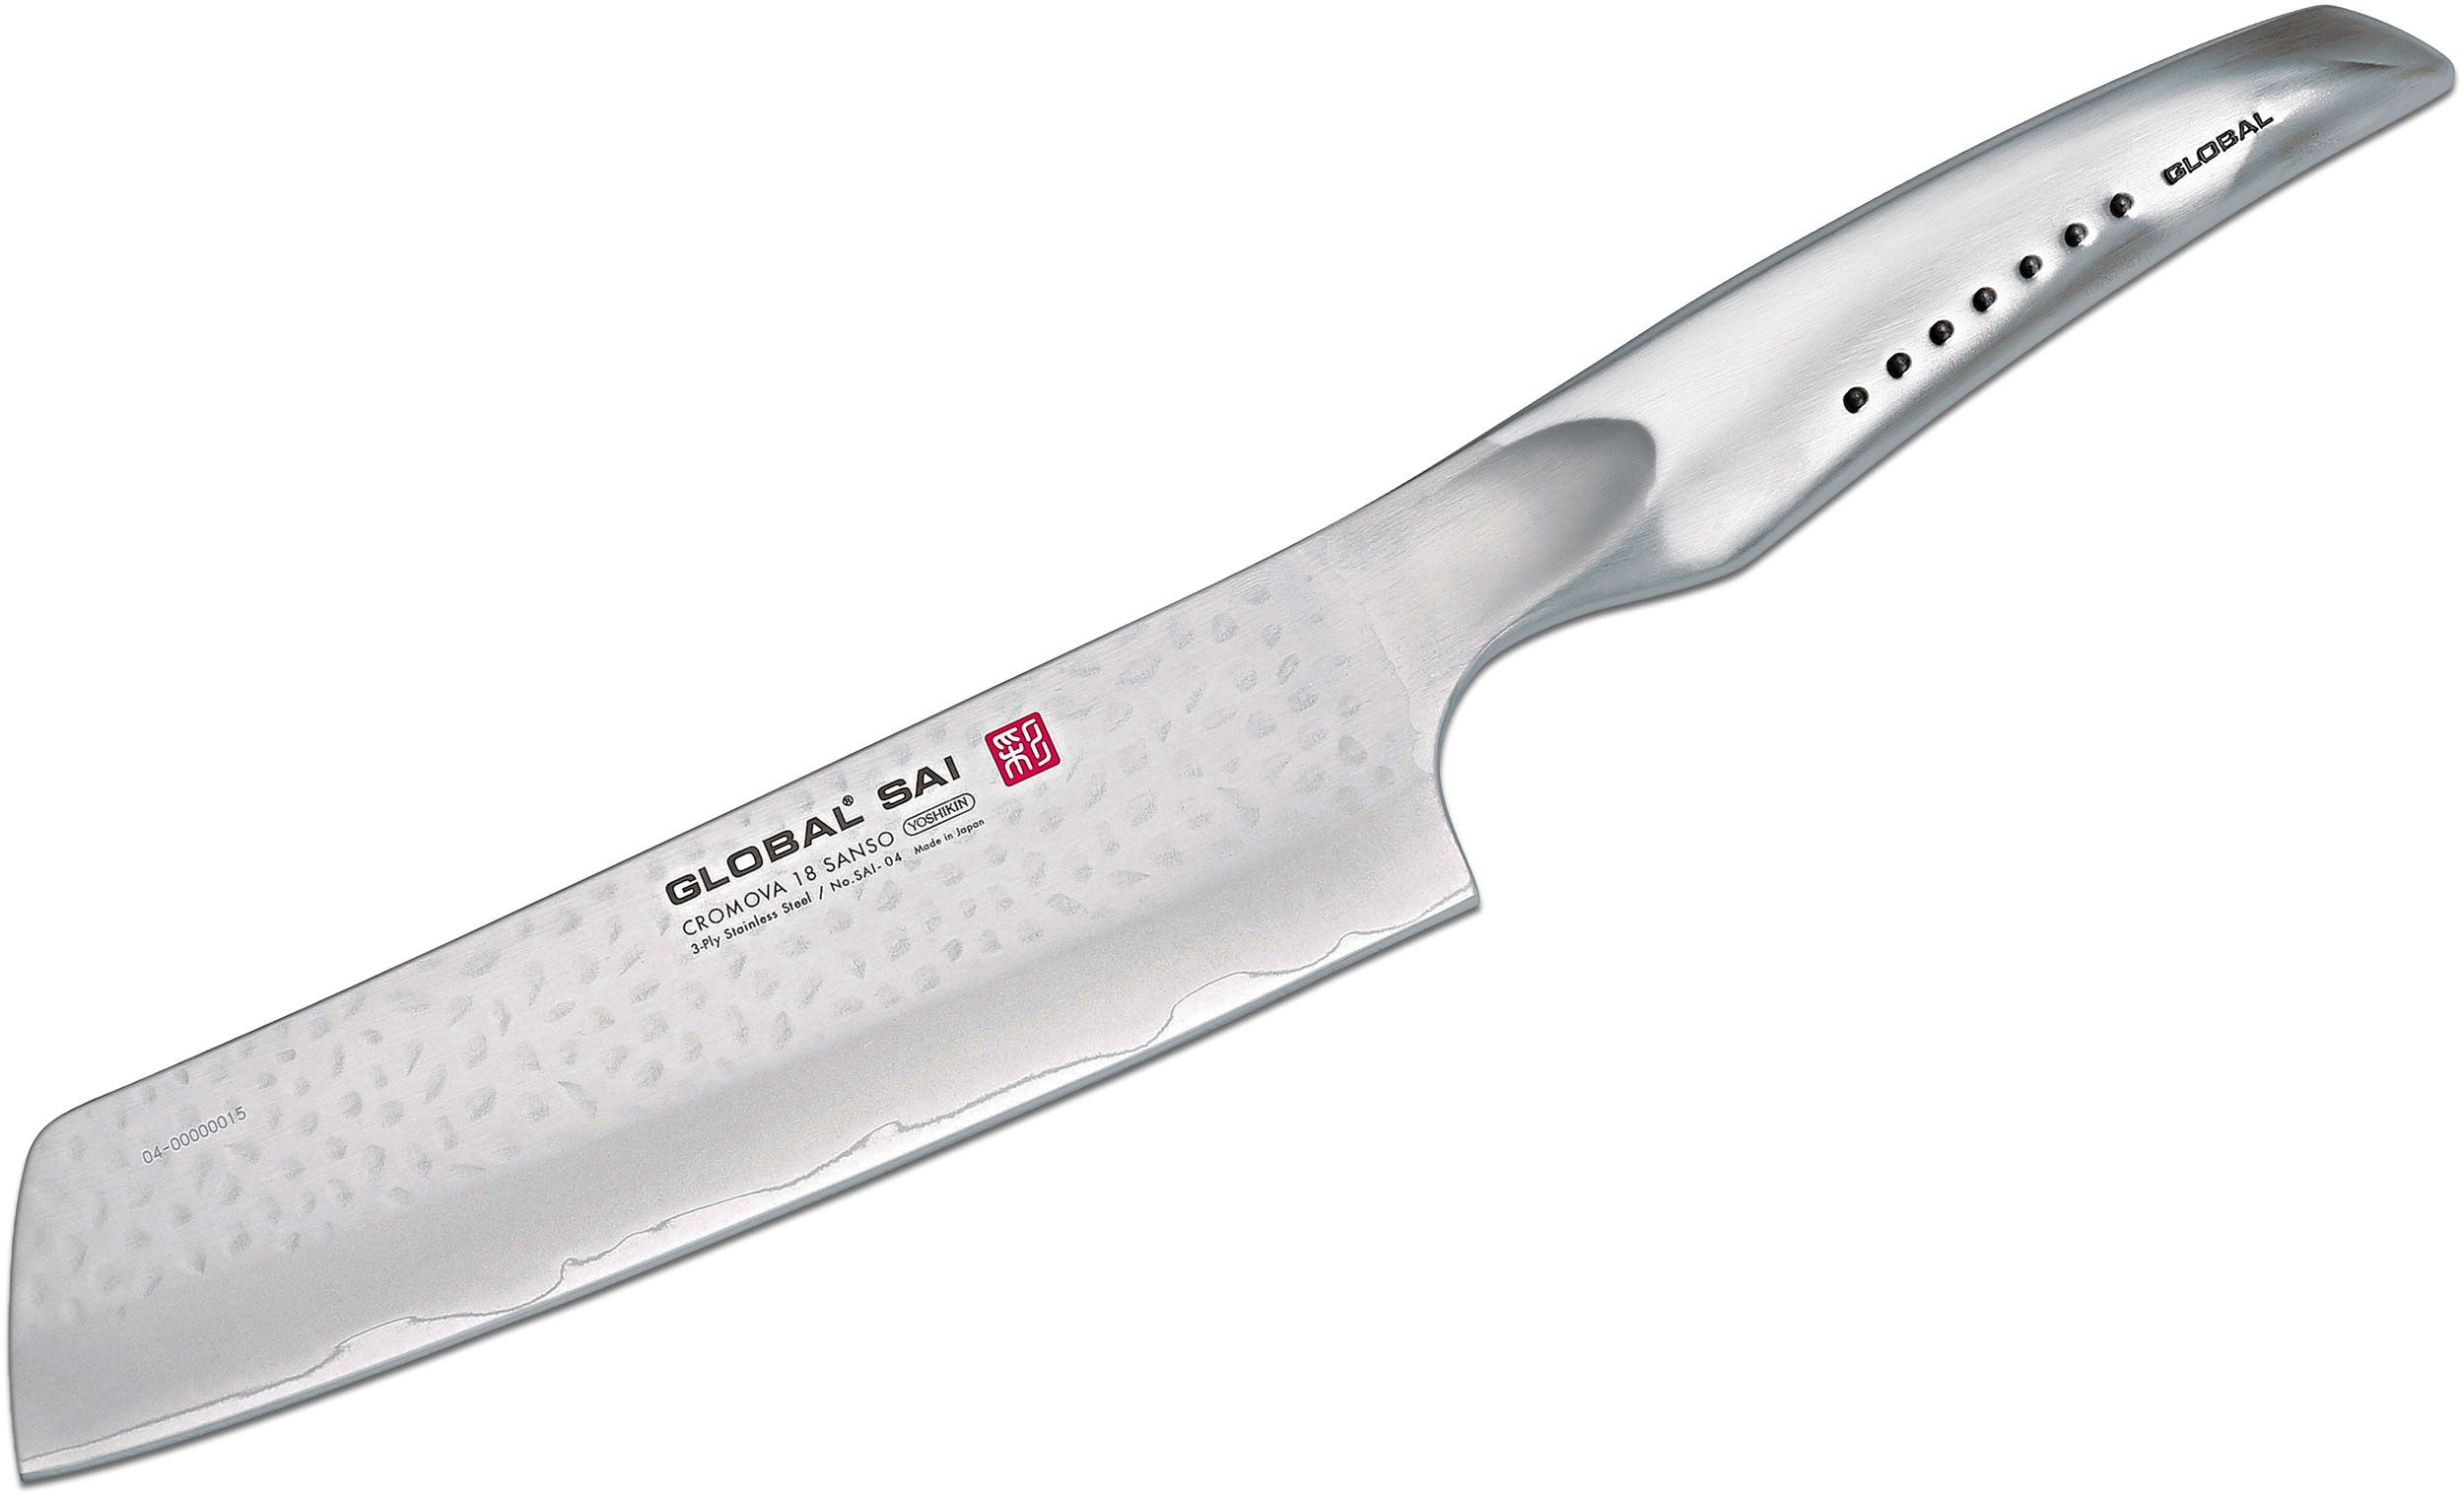 SAI-04 Sai Vegetable Knife 7.5" Hammered Blade - KnifeCenter